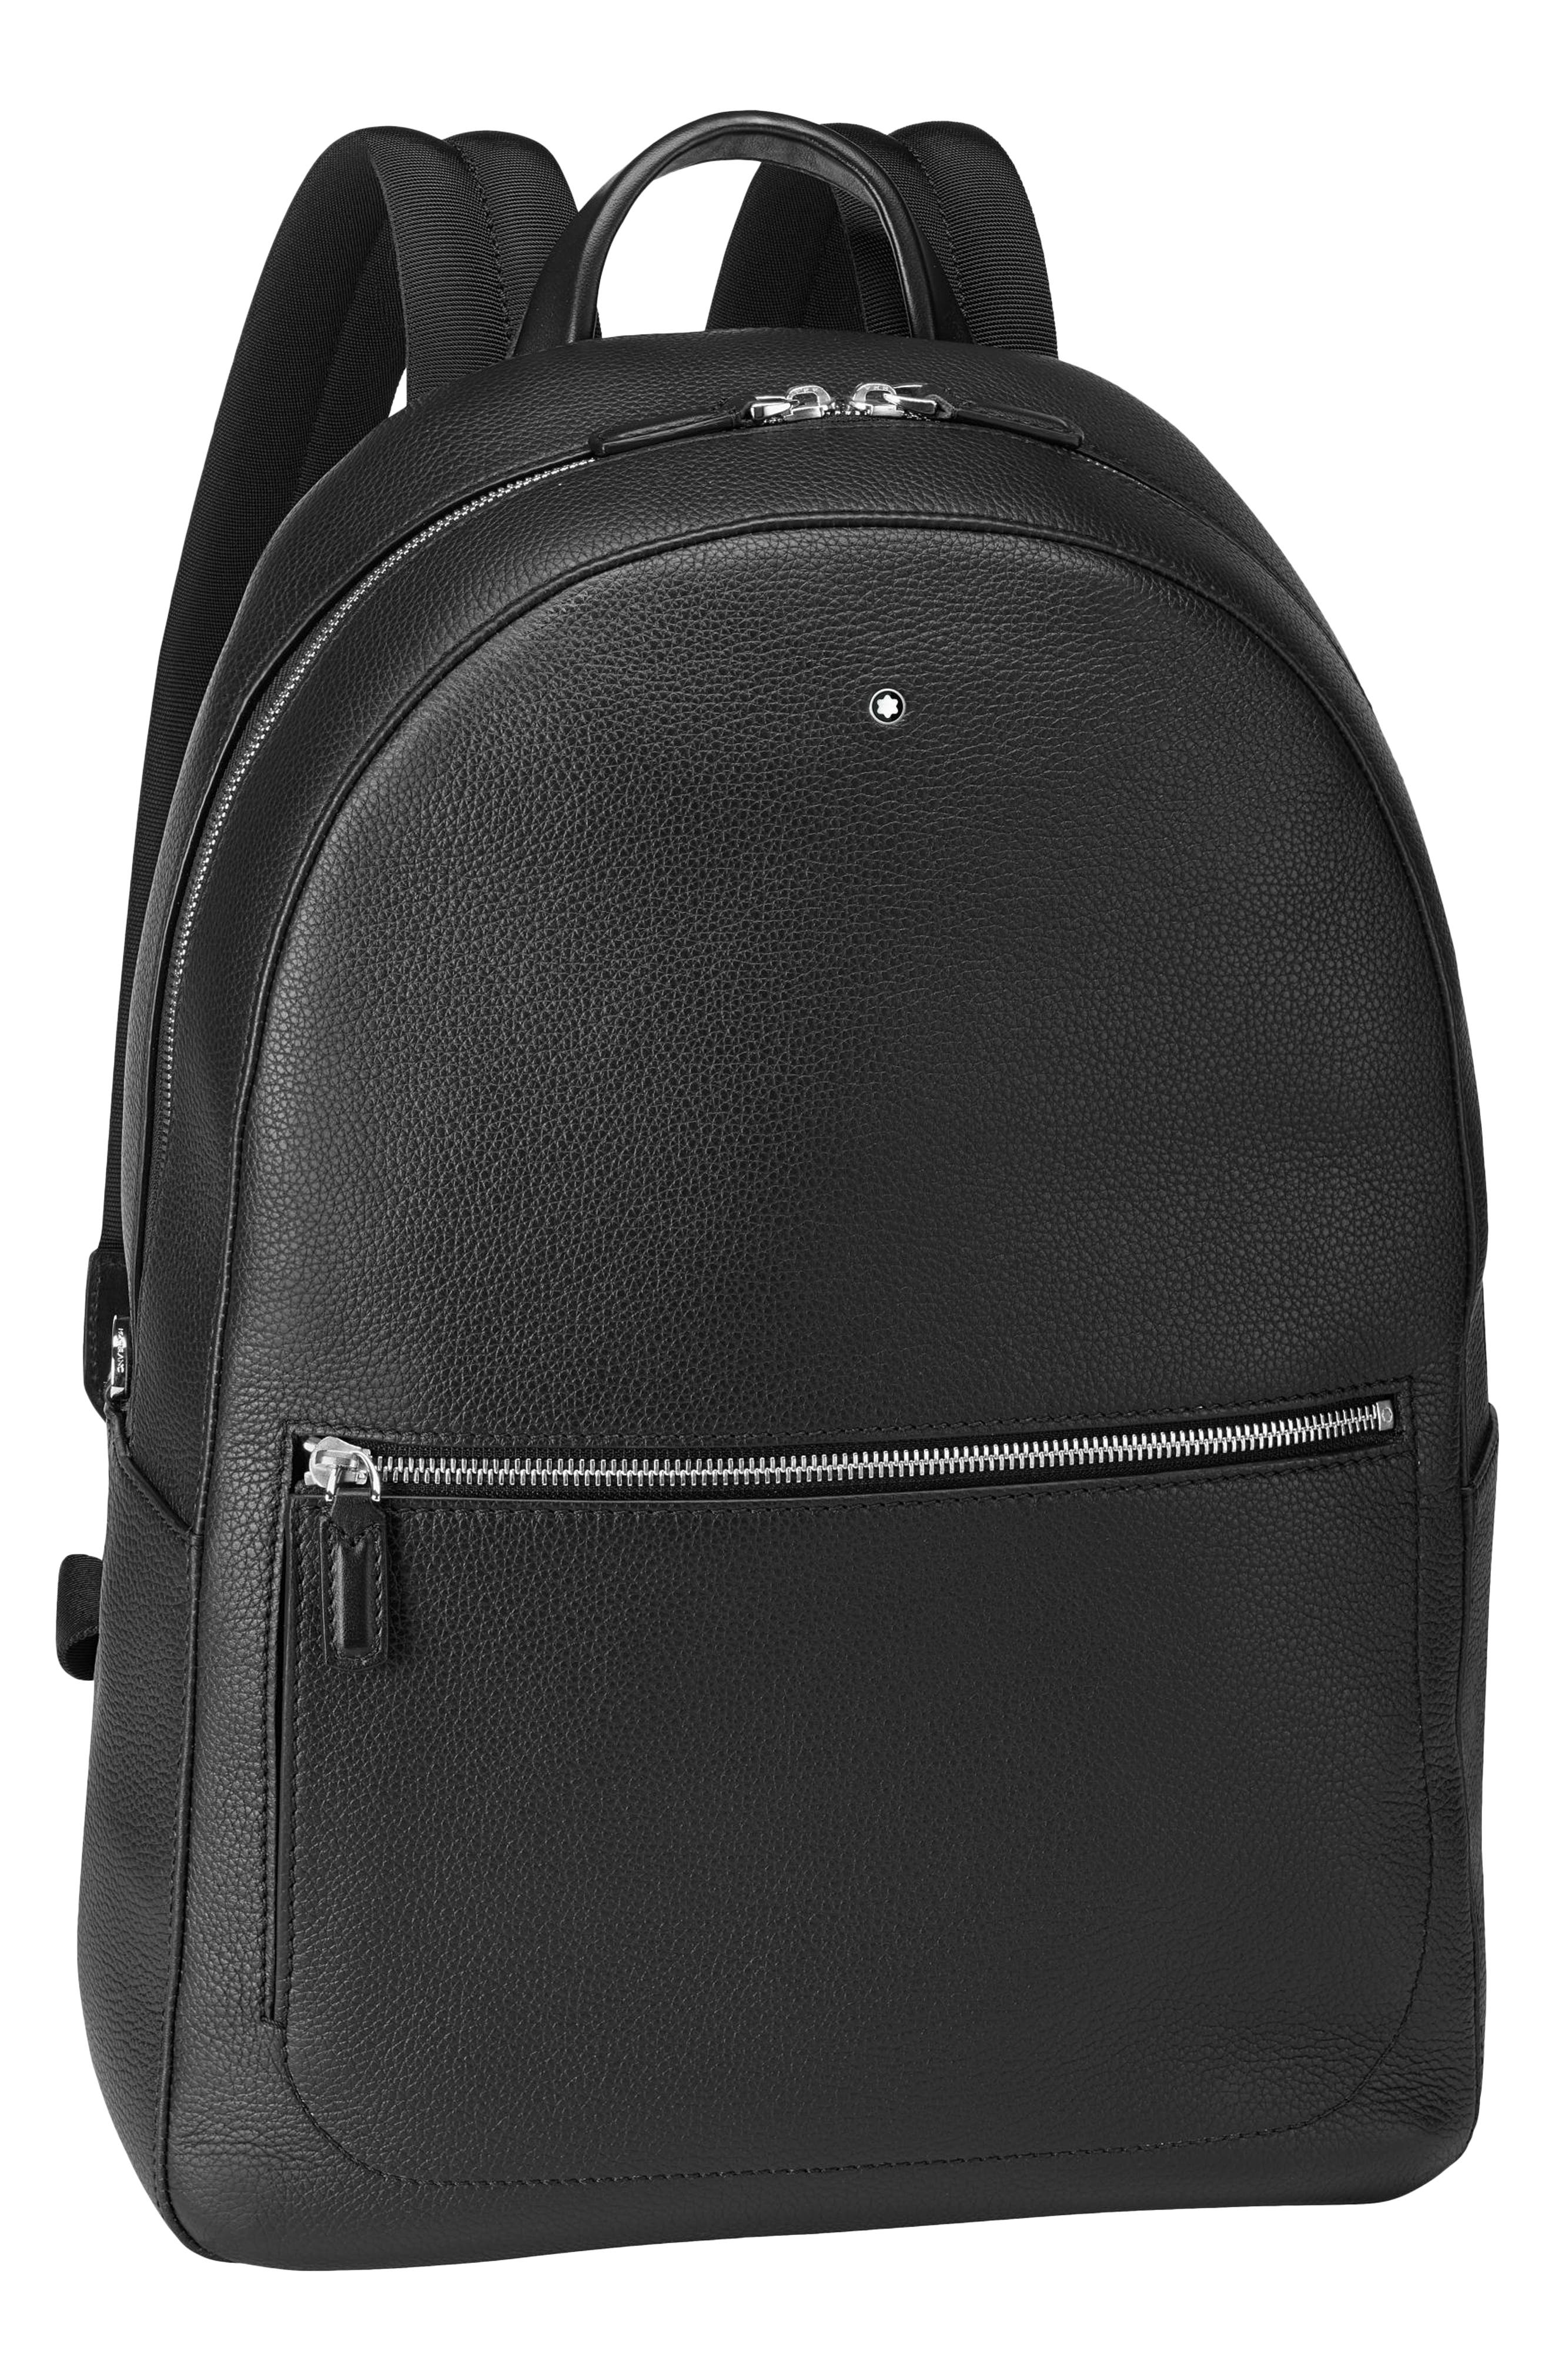 Leather (Genuine) Backpacks | Nordstrom